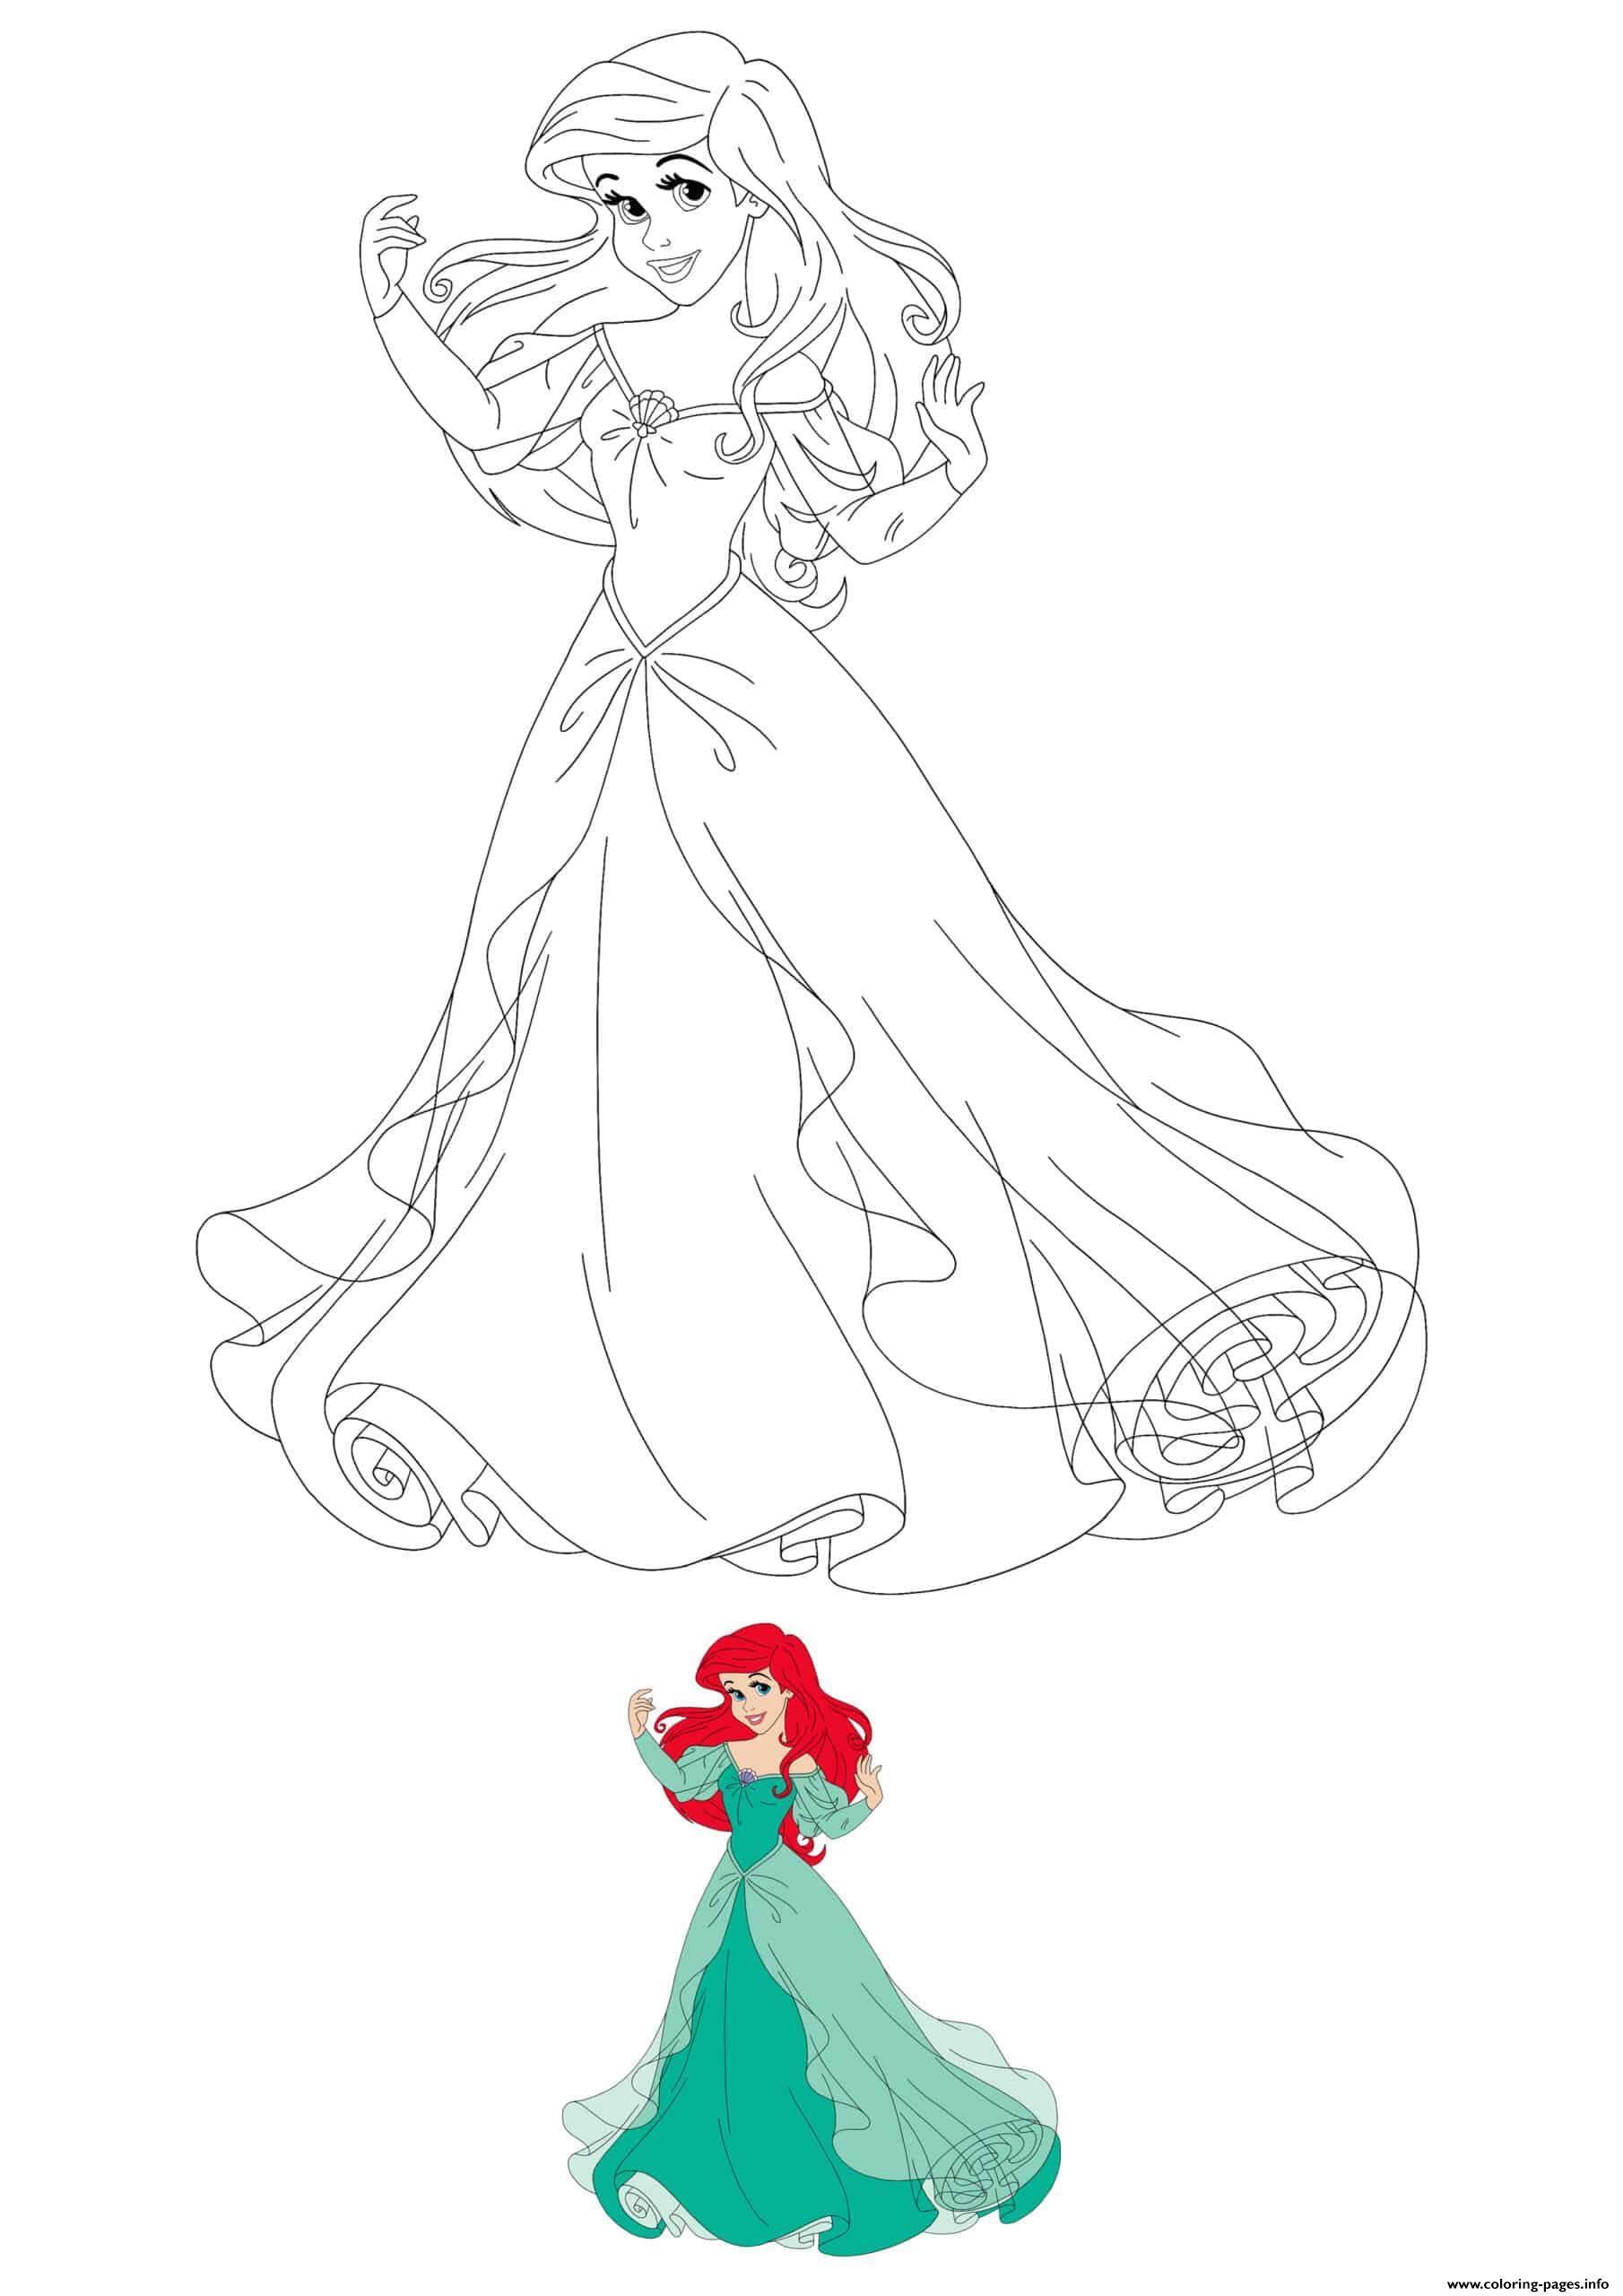 Disney Princess Ariel coloring